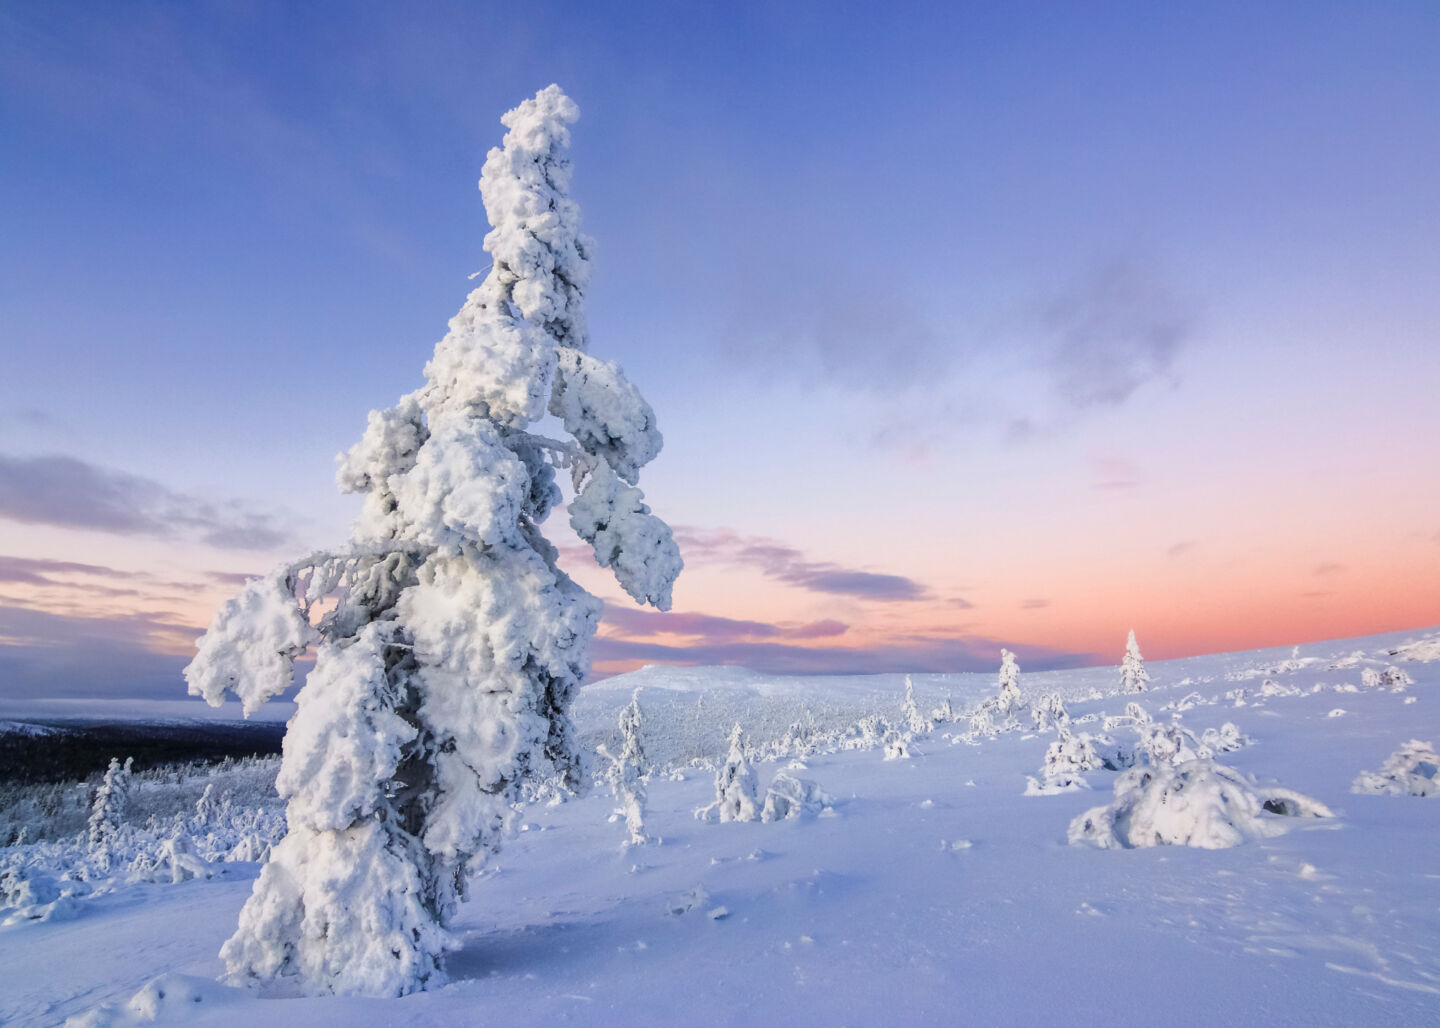 Polar night and frozen wilderness in Sompio & Sodankylä, Finland